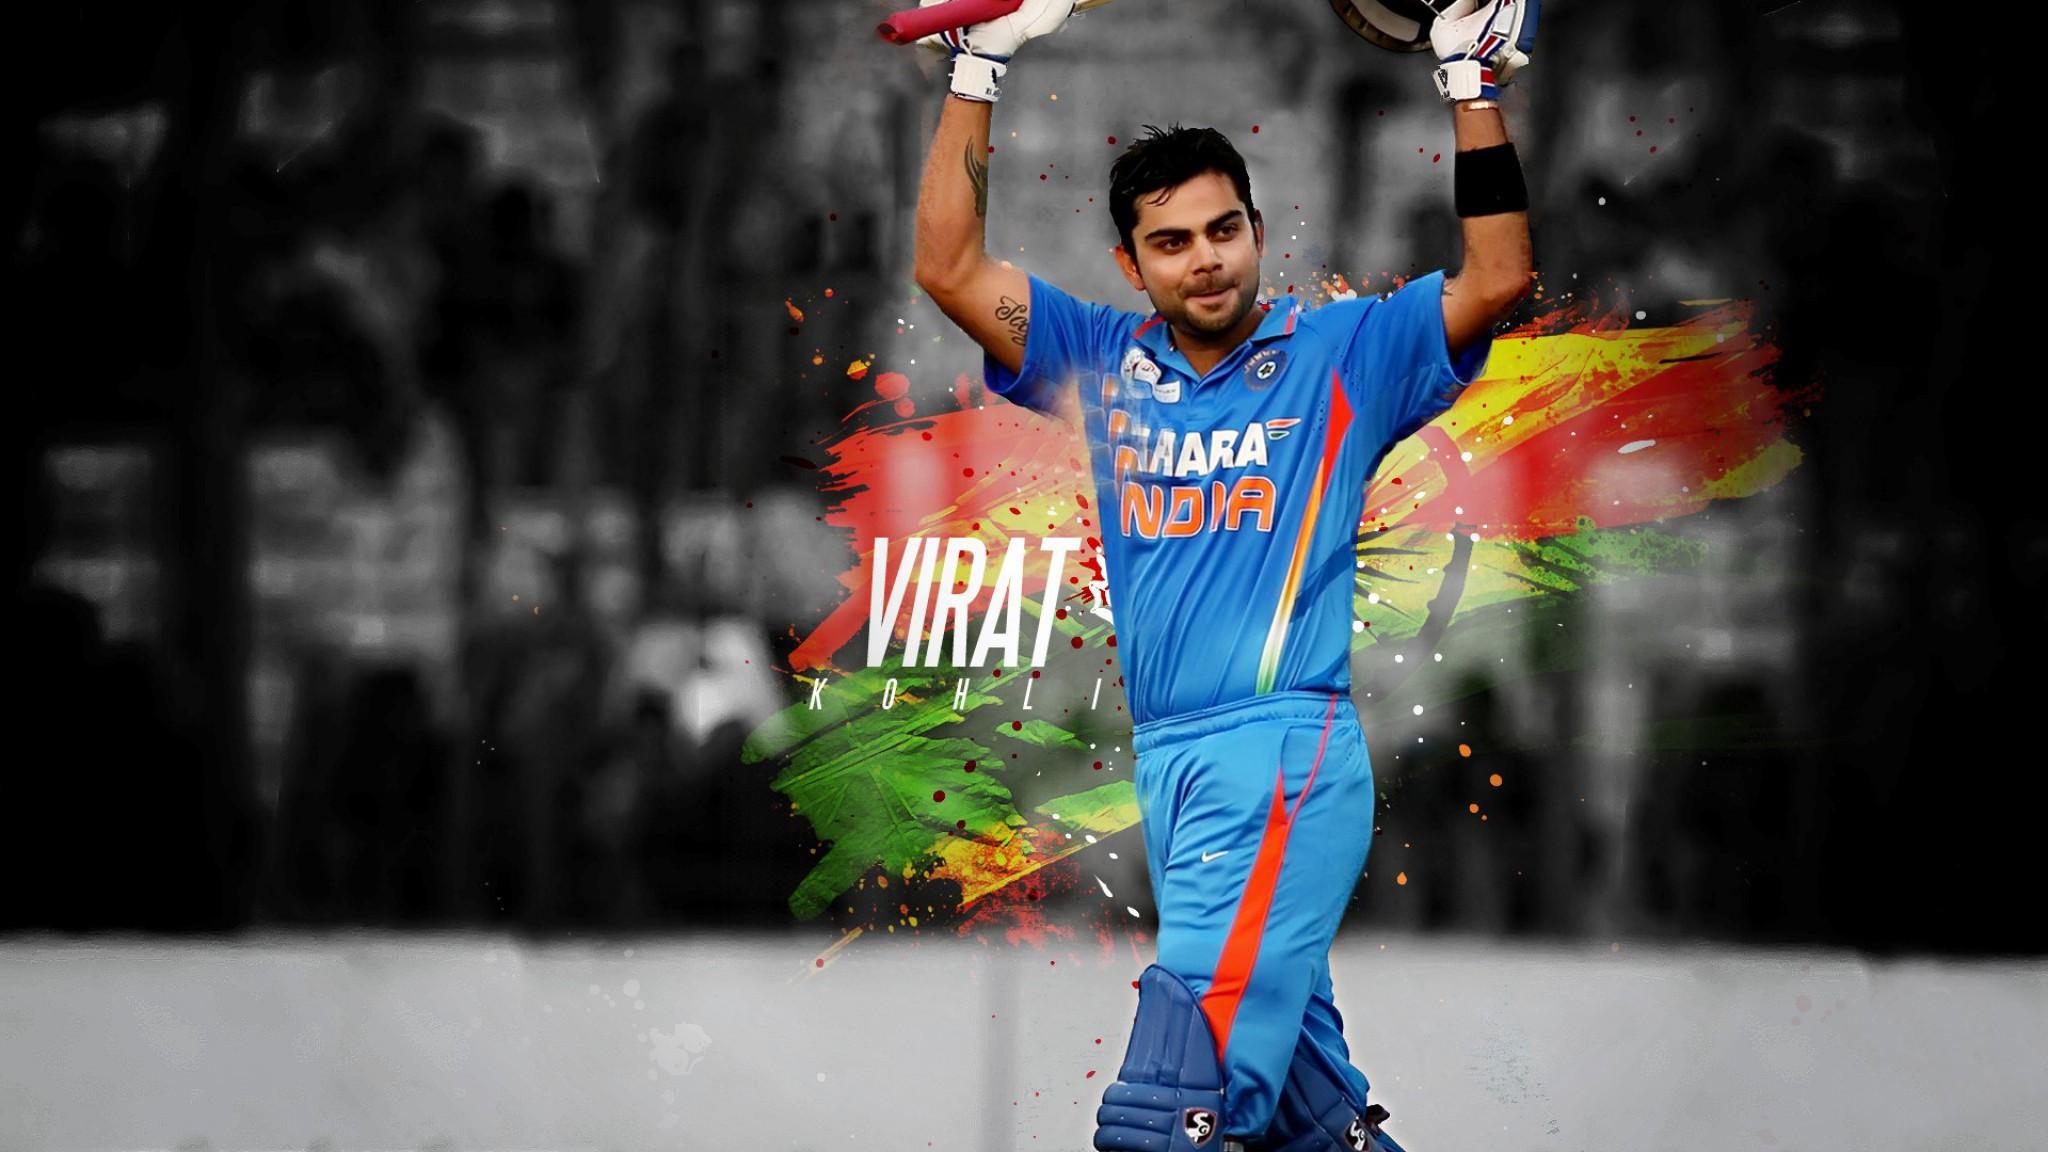 Download 2048x1152 Handsome Virat Kohli with Bat Indian Cricket Player Wallpaper